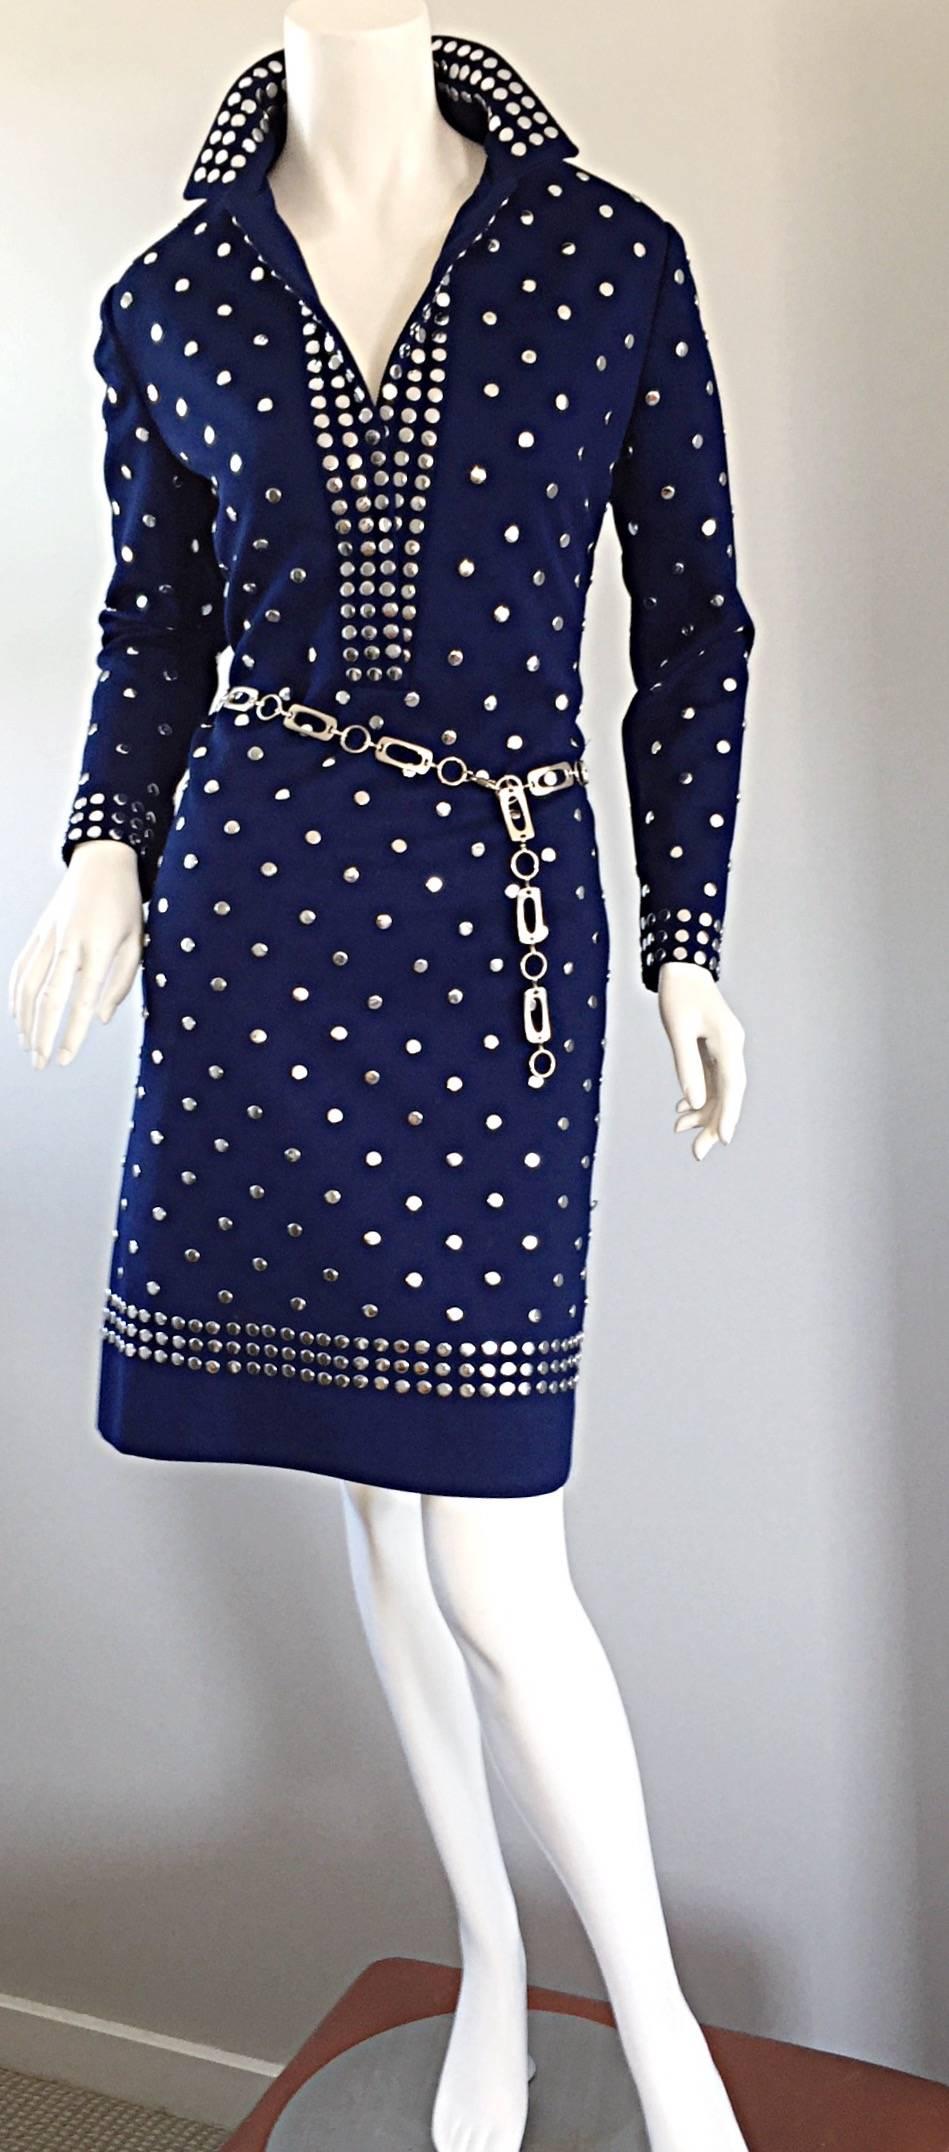 Black Donald Brooks Navy Blue + Silver Studded Vintage Dress w/ Chain Belt